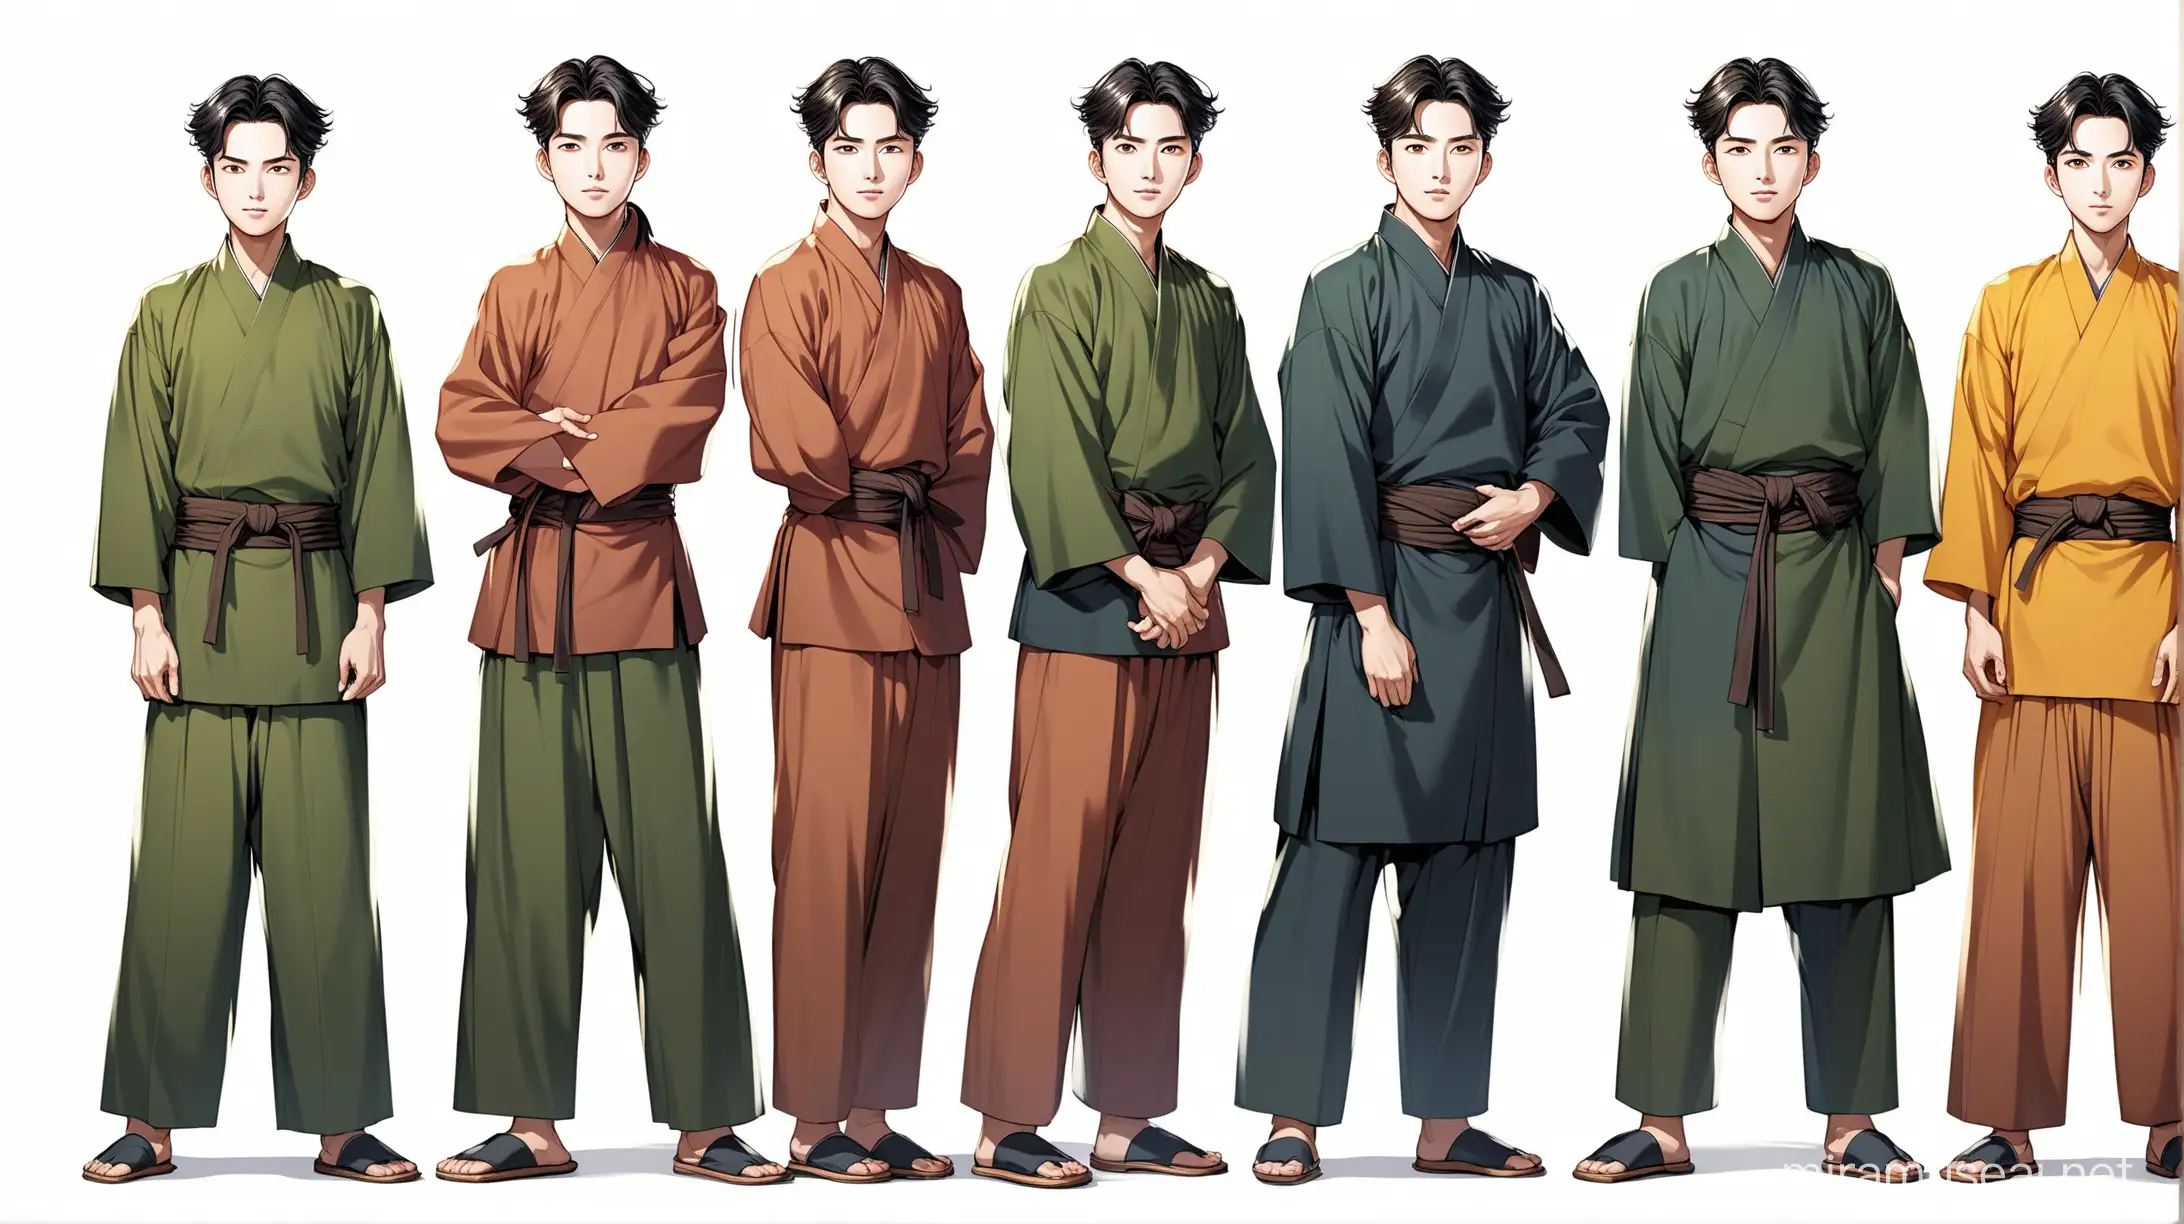 Six Korean Village Men in Diverse Traditional Clothing Poses